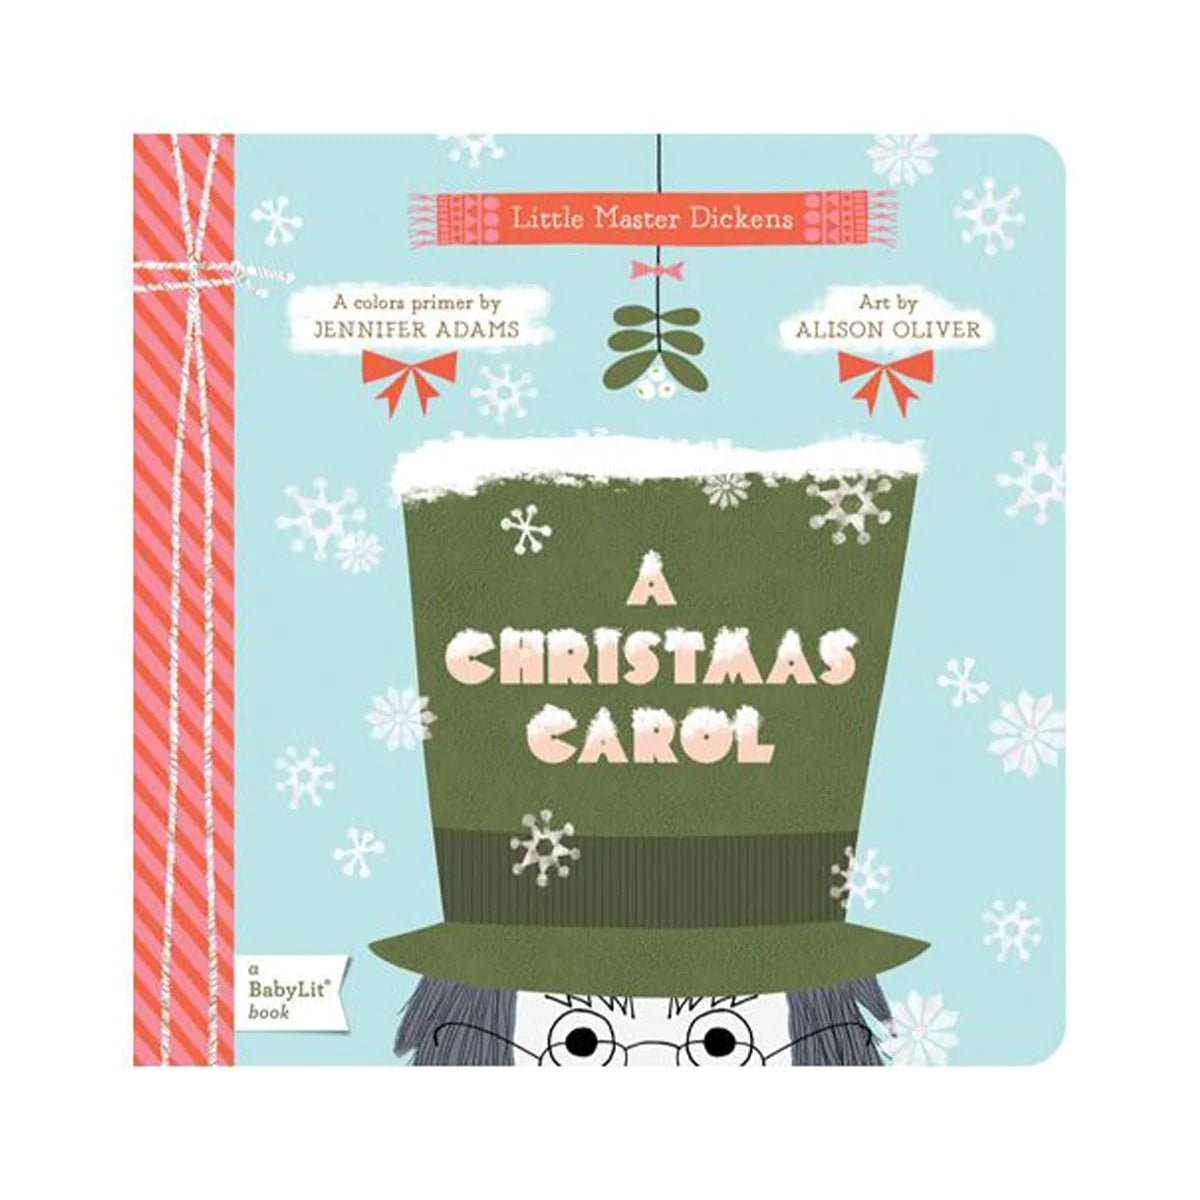 A Christmas Carol: A BabyLit Colors Primer